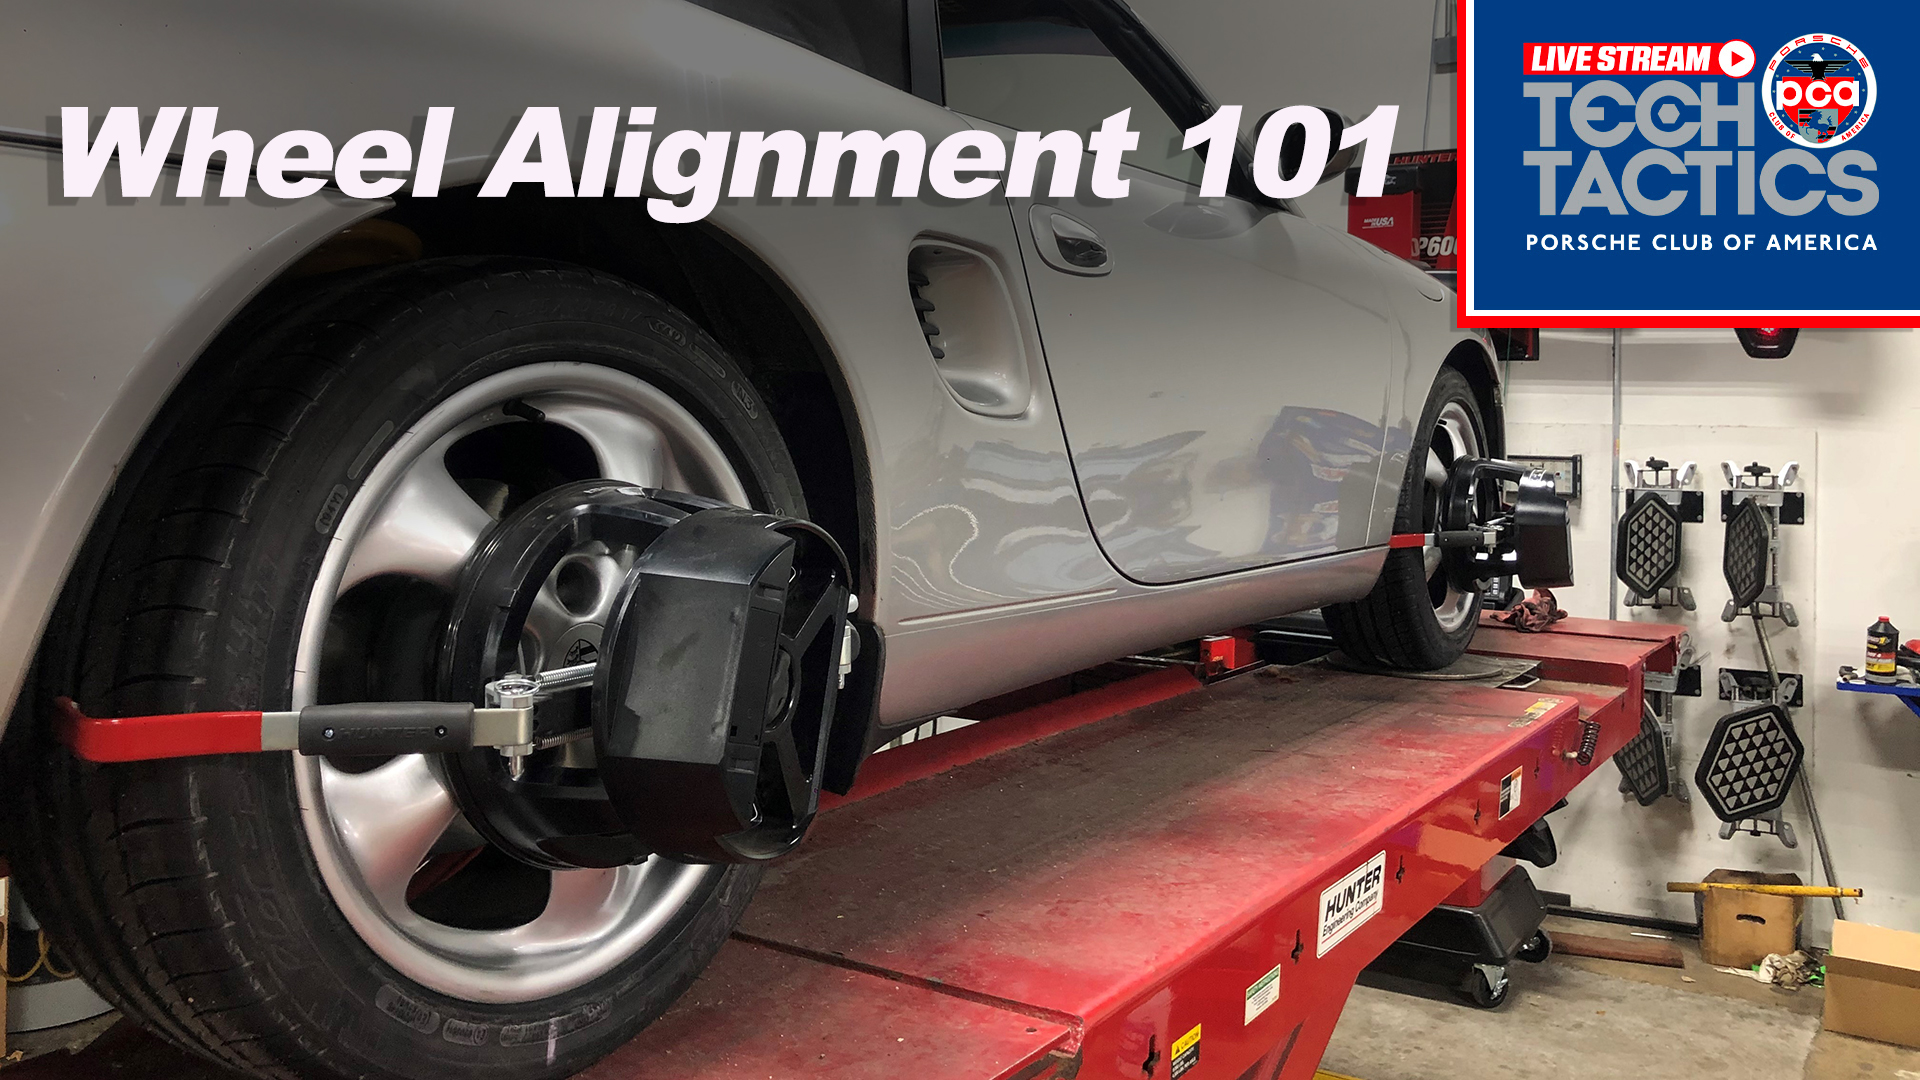 Porsche Club of America - Wheel Alignment 101 | Tech Tactics Live